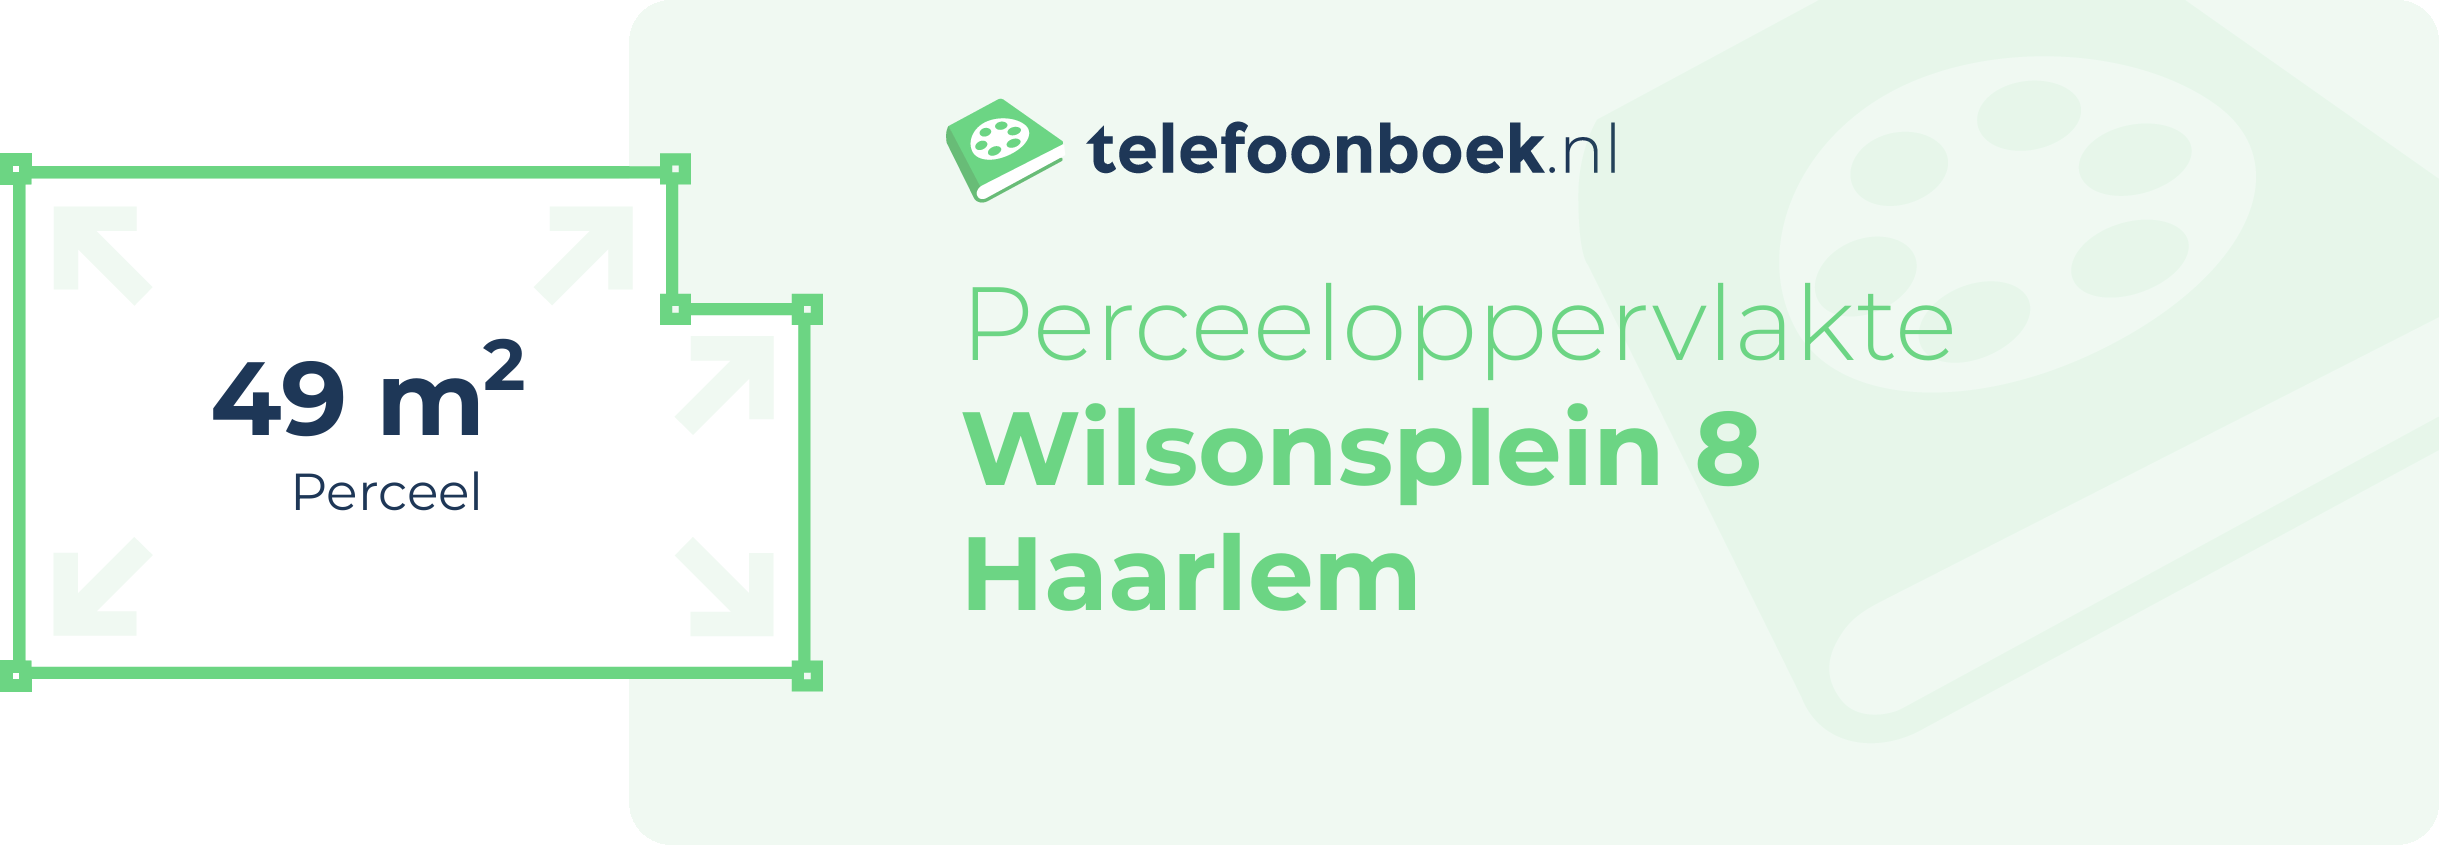 Perceeloppervlakte Wilsonsplein 8 Haarlem